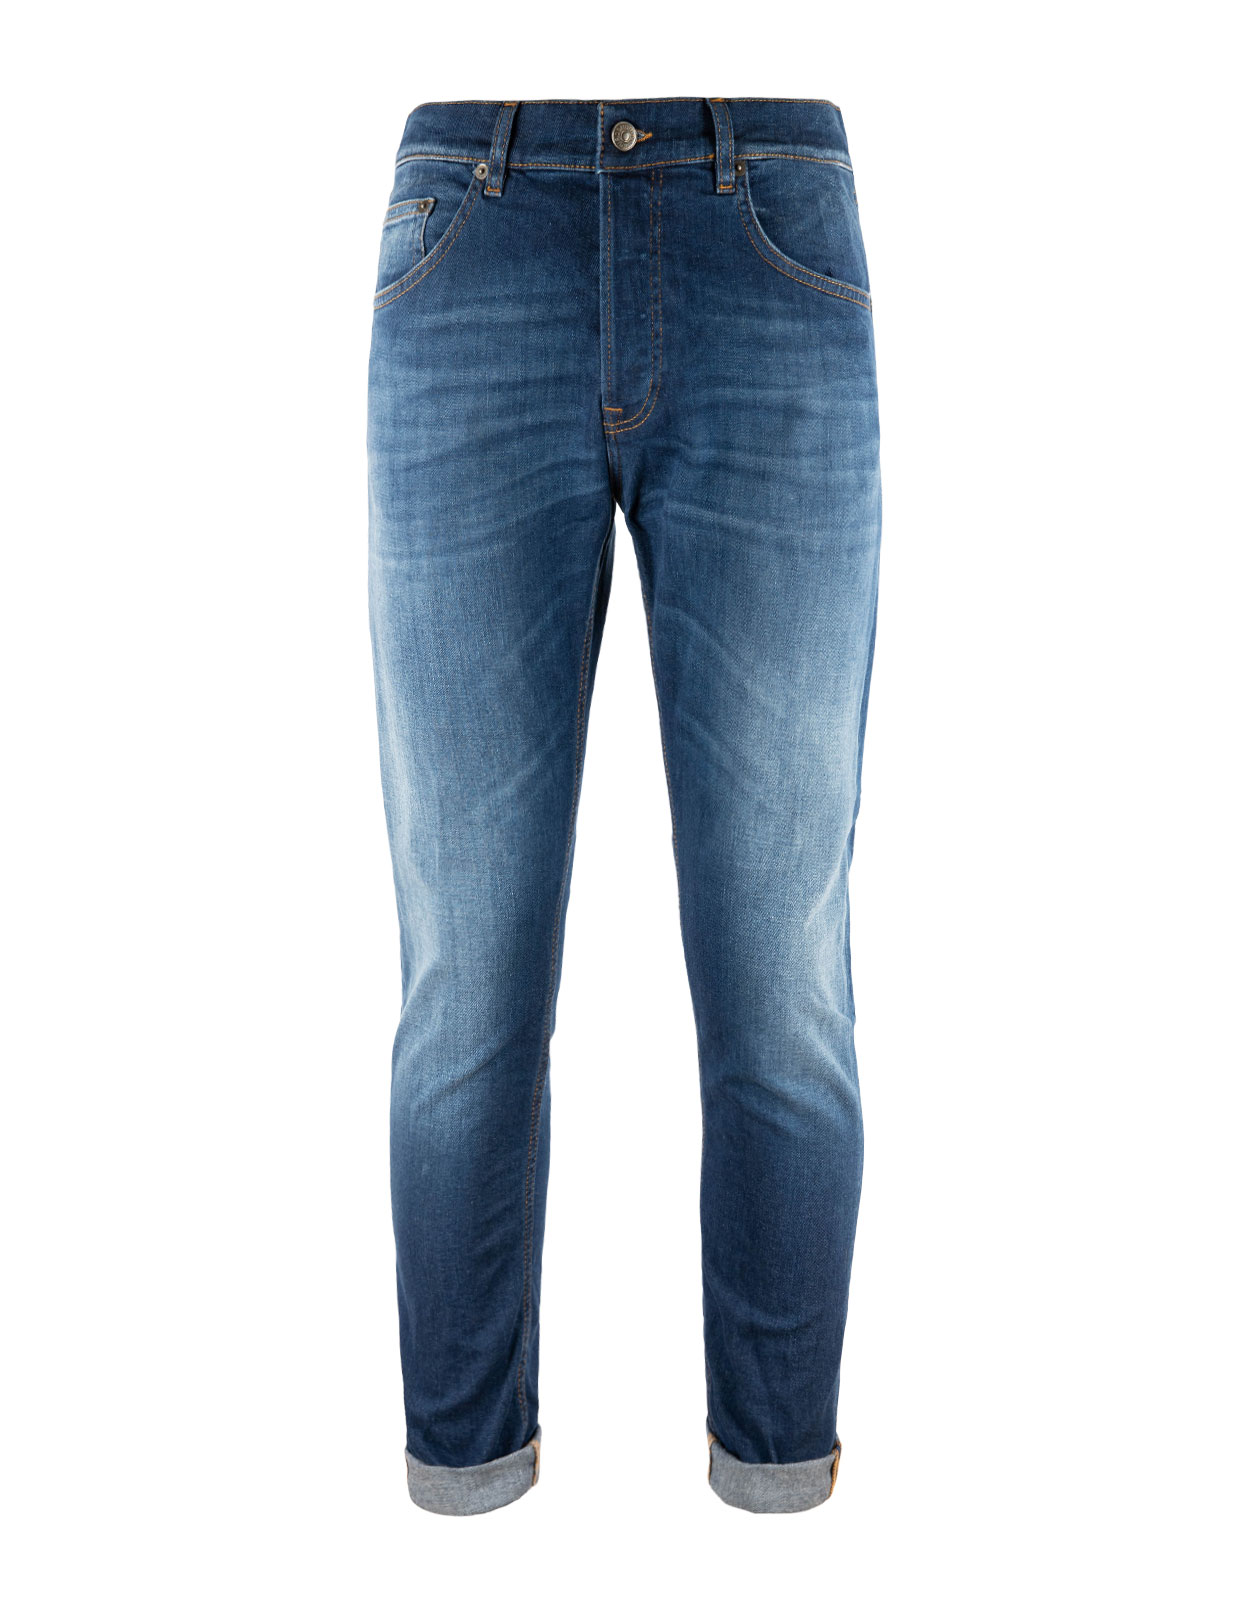 Jeans UP563 FO Blue Denim